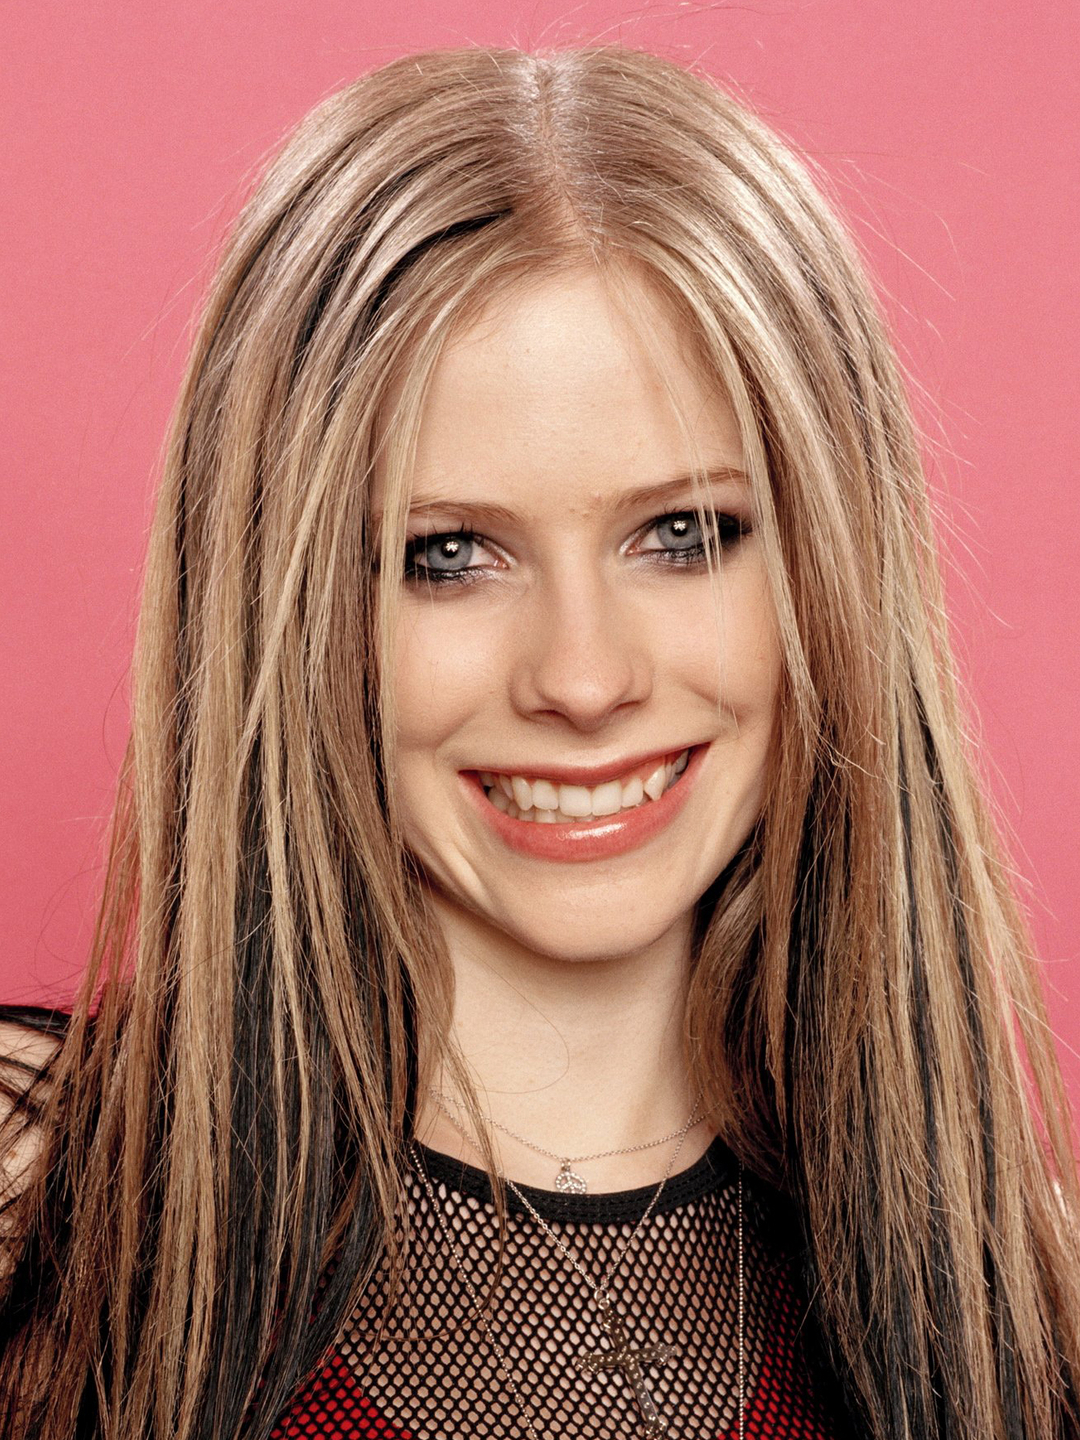 Avril Lavigne appearance